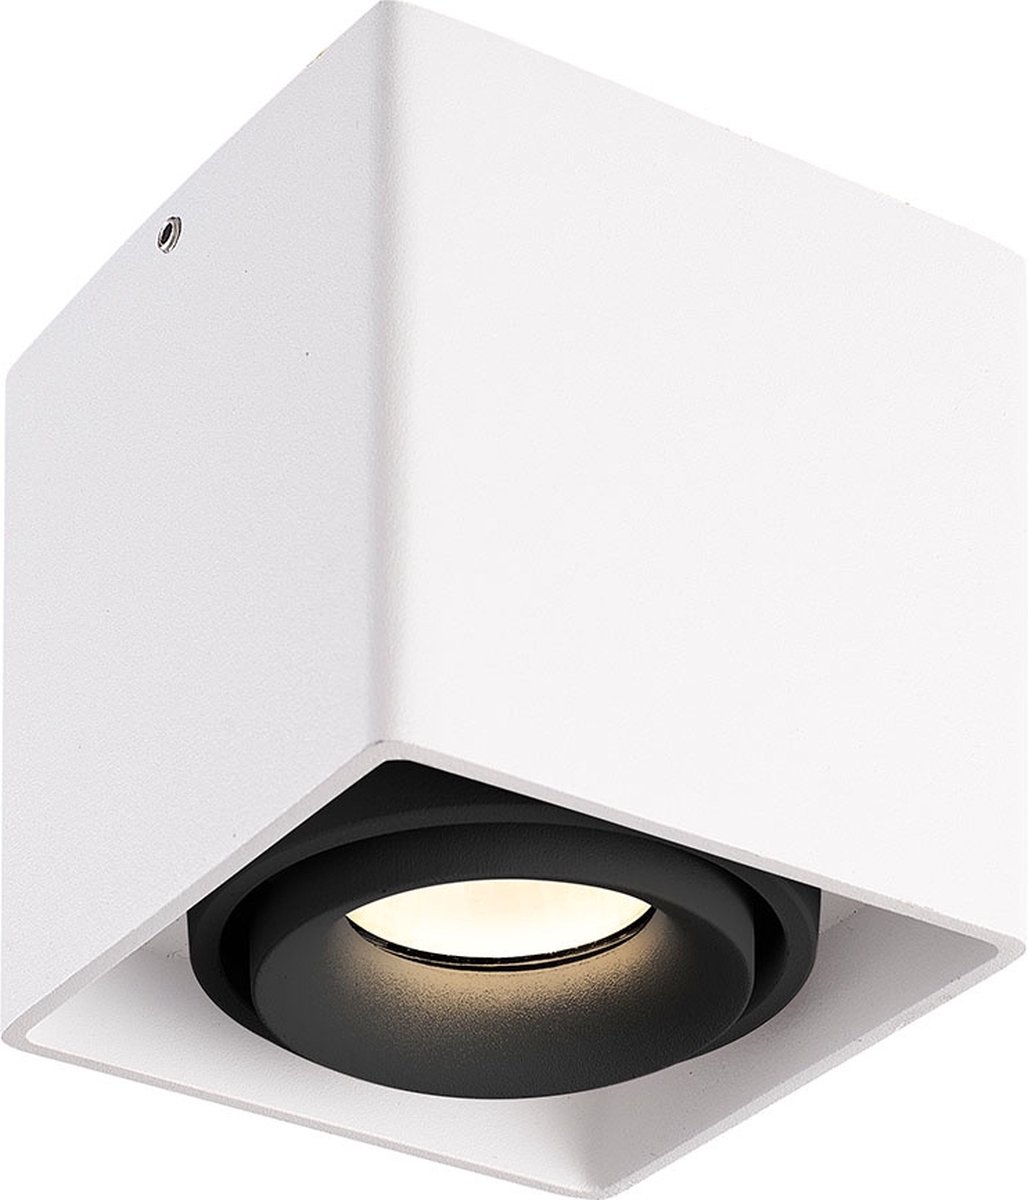 Dimbare LED Opbouwspot plafond Esto Wit met zwarte afdekring IP20 kantelbaar excl. GU10 lichtbron